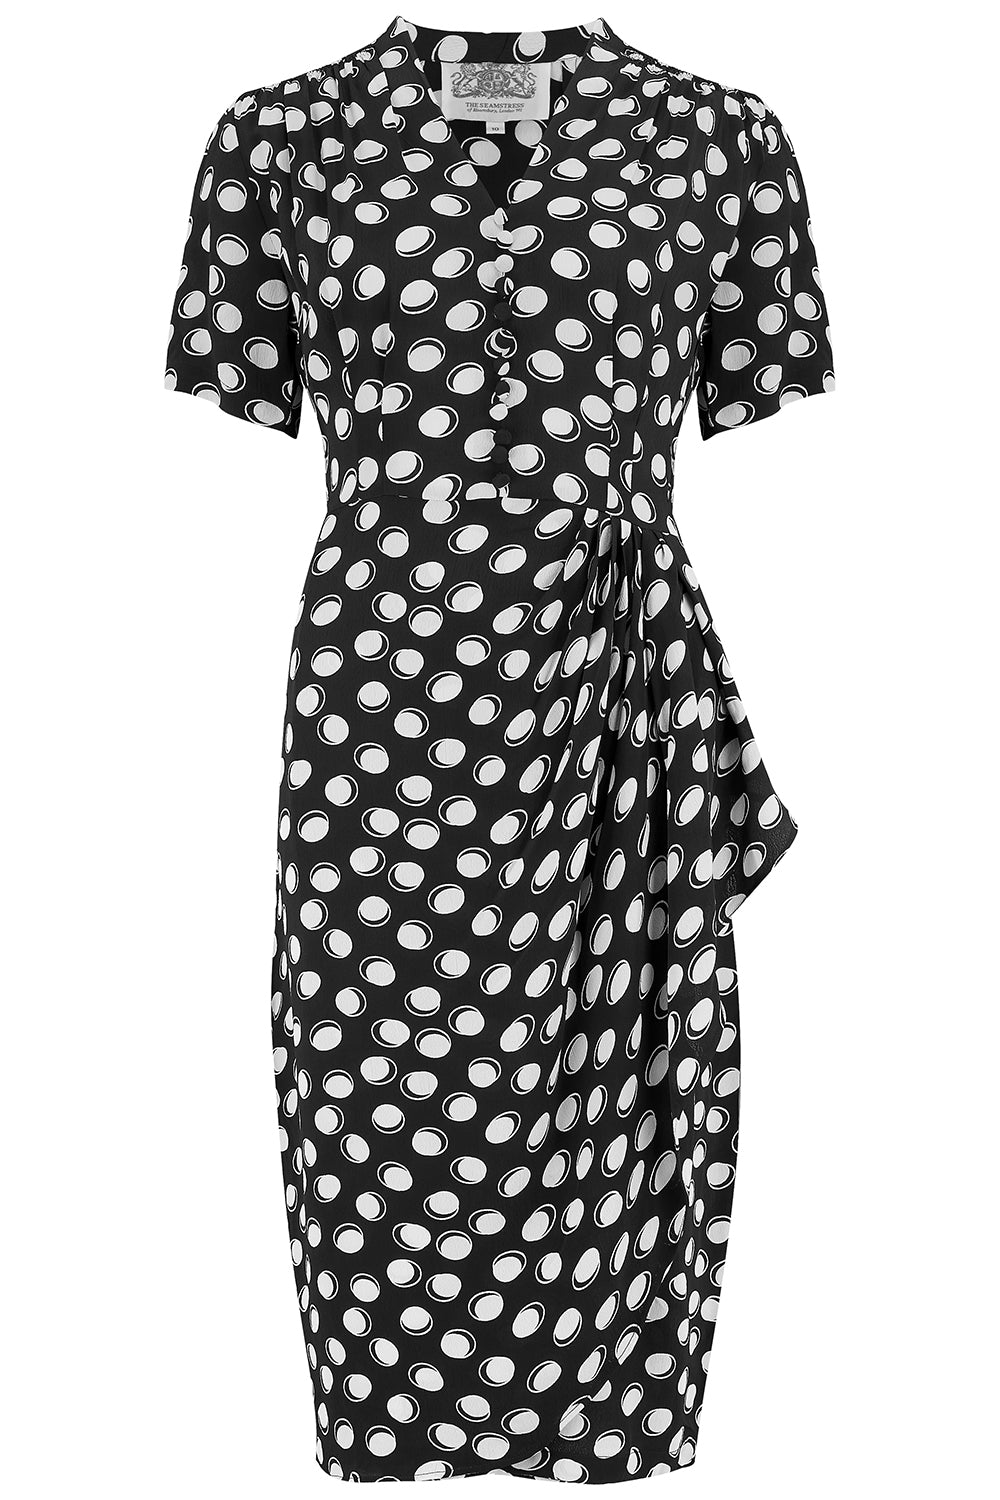 "Mabel" Dress in Black Moonshine Print, A Classic 1940s Inspired Vintage Style - CC41, Goodwood Revival, Twinwood Festival, Viva Las Vegas Rockabilly Weekend Rock n Romance The Seamstress of Bloomsbury